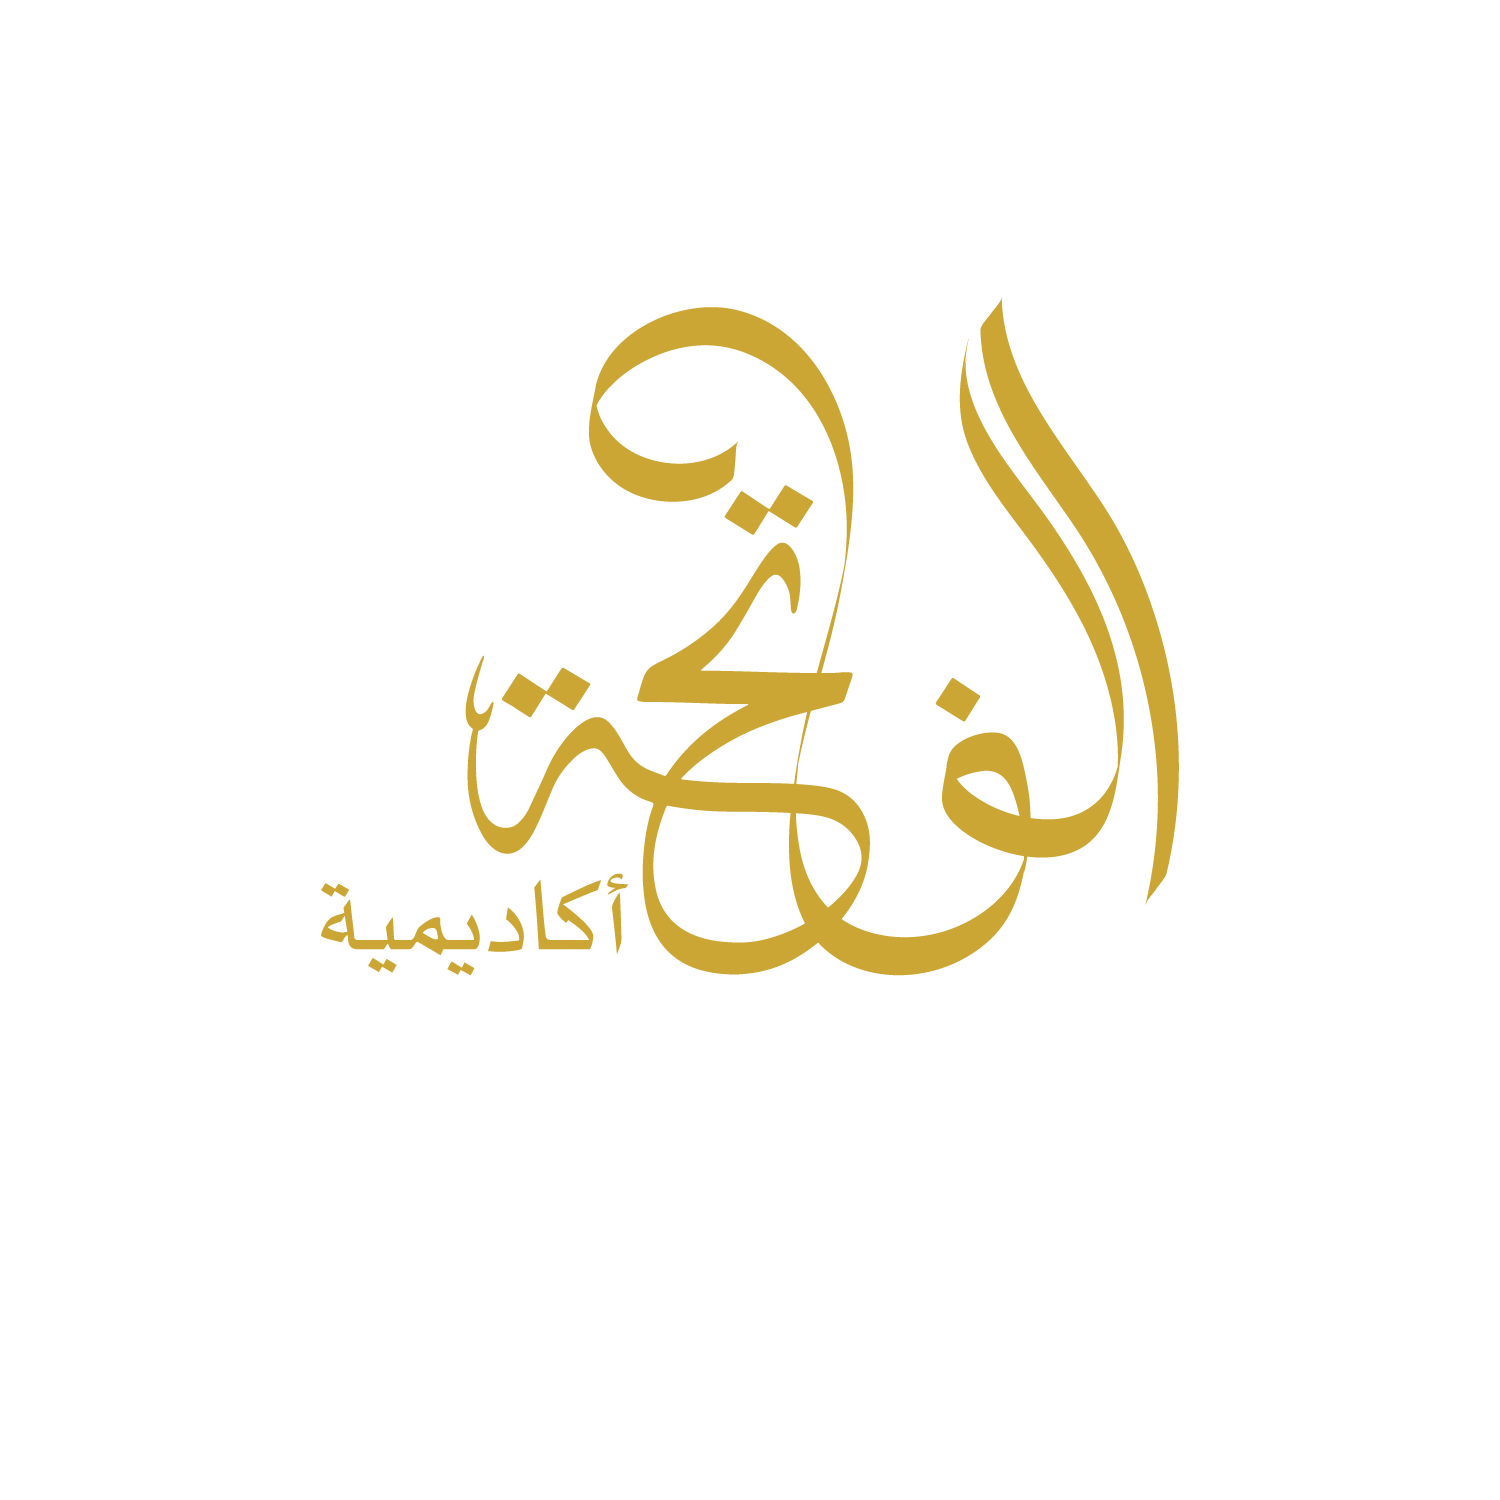 Fatiha Academy